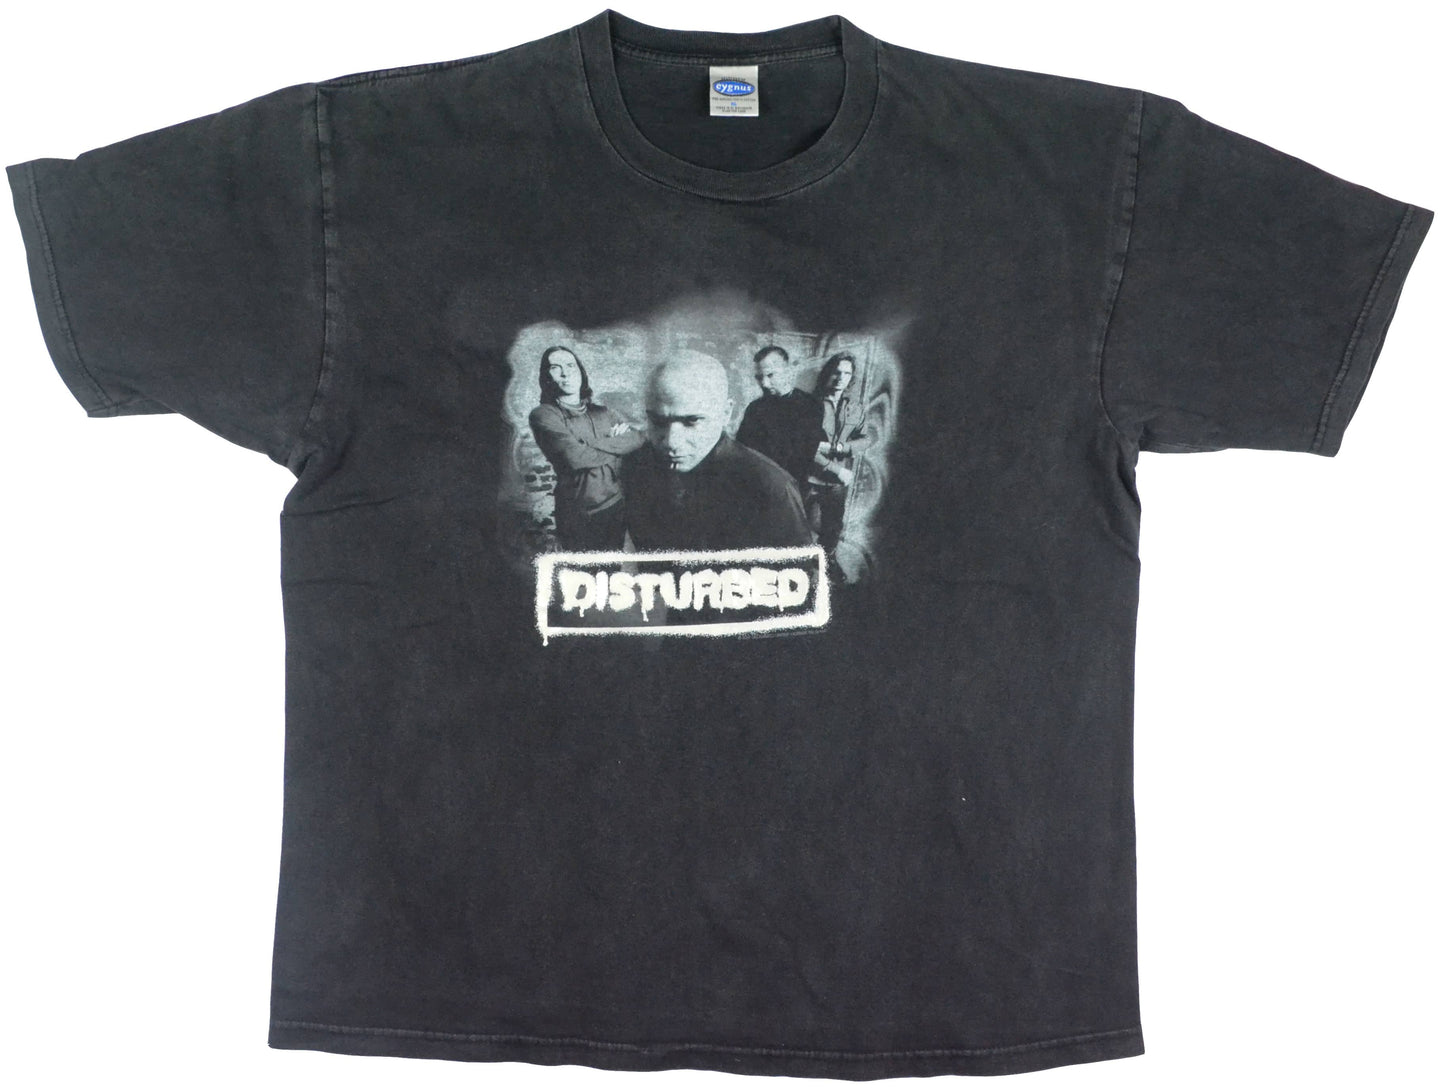 Vintage Band T-Shirt 2002 Disturbed "Reflective", Camiseta